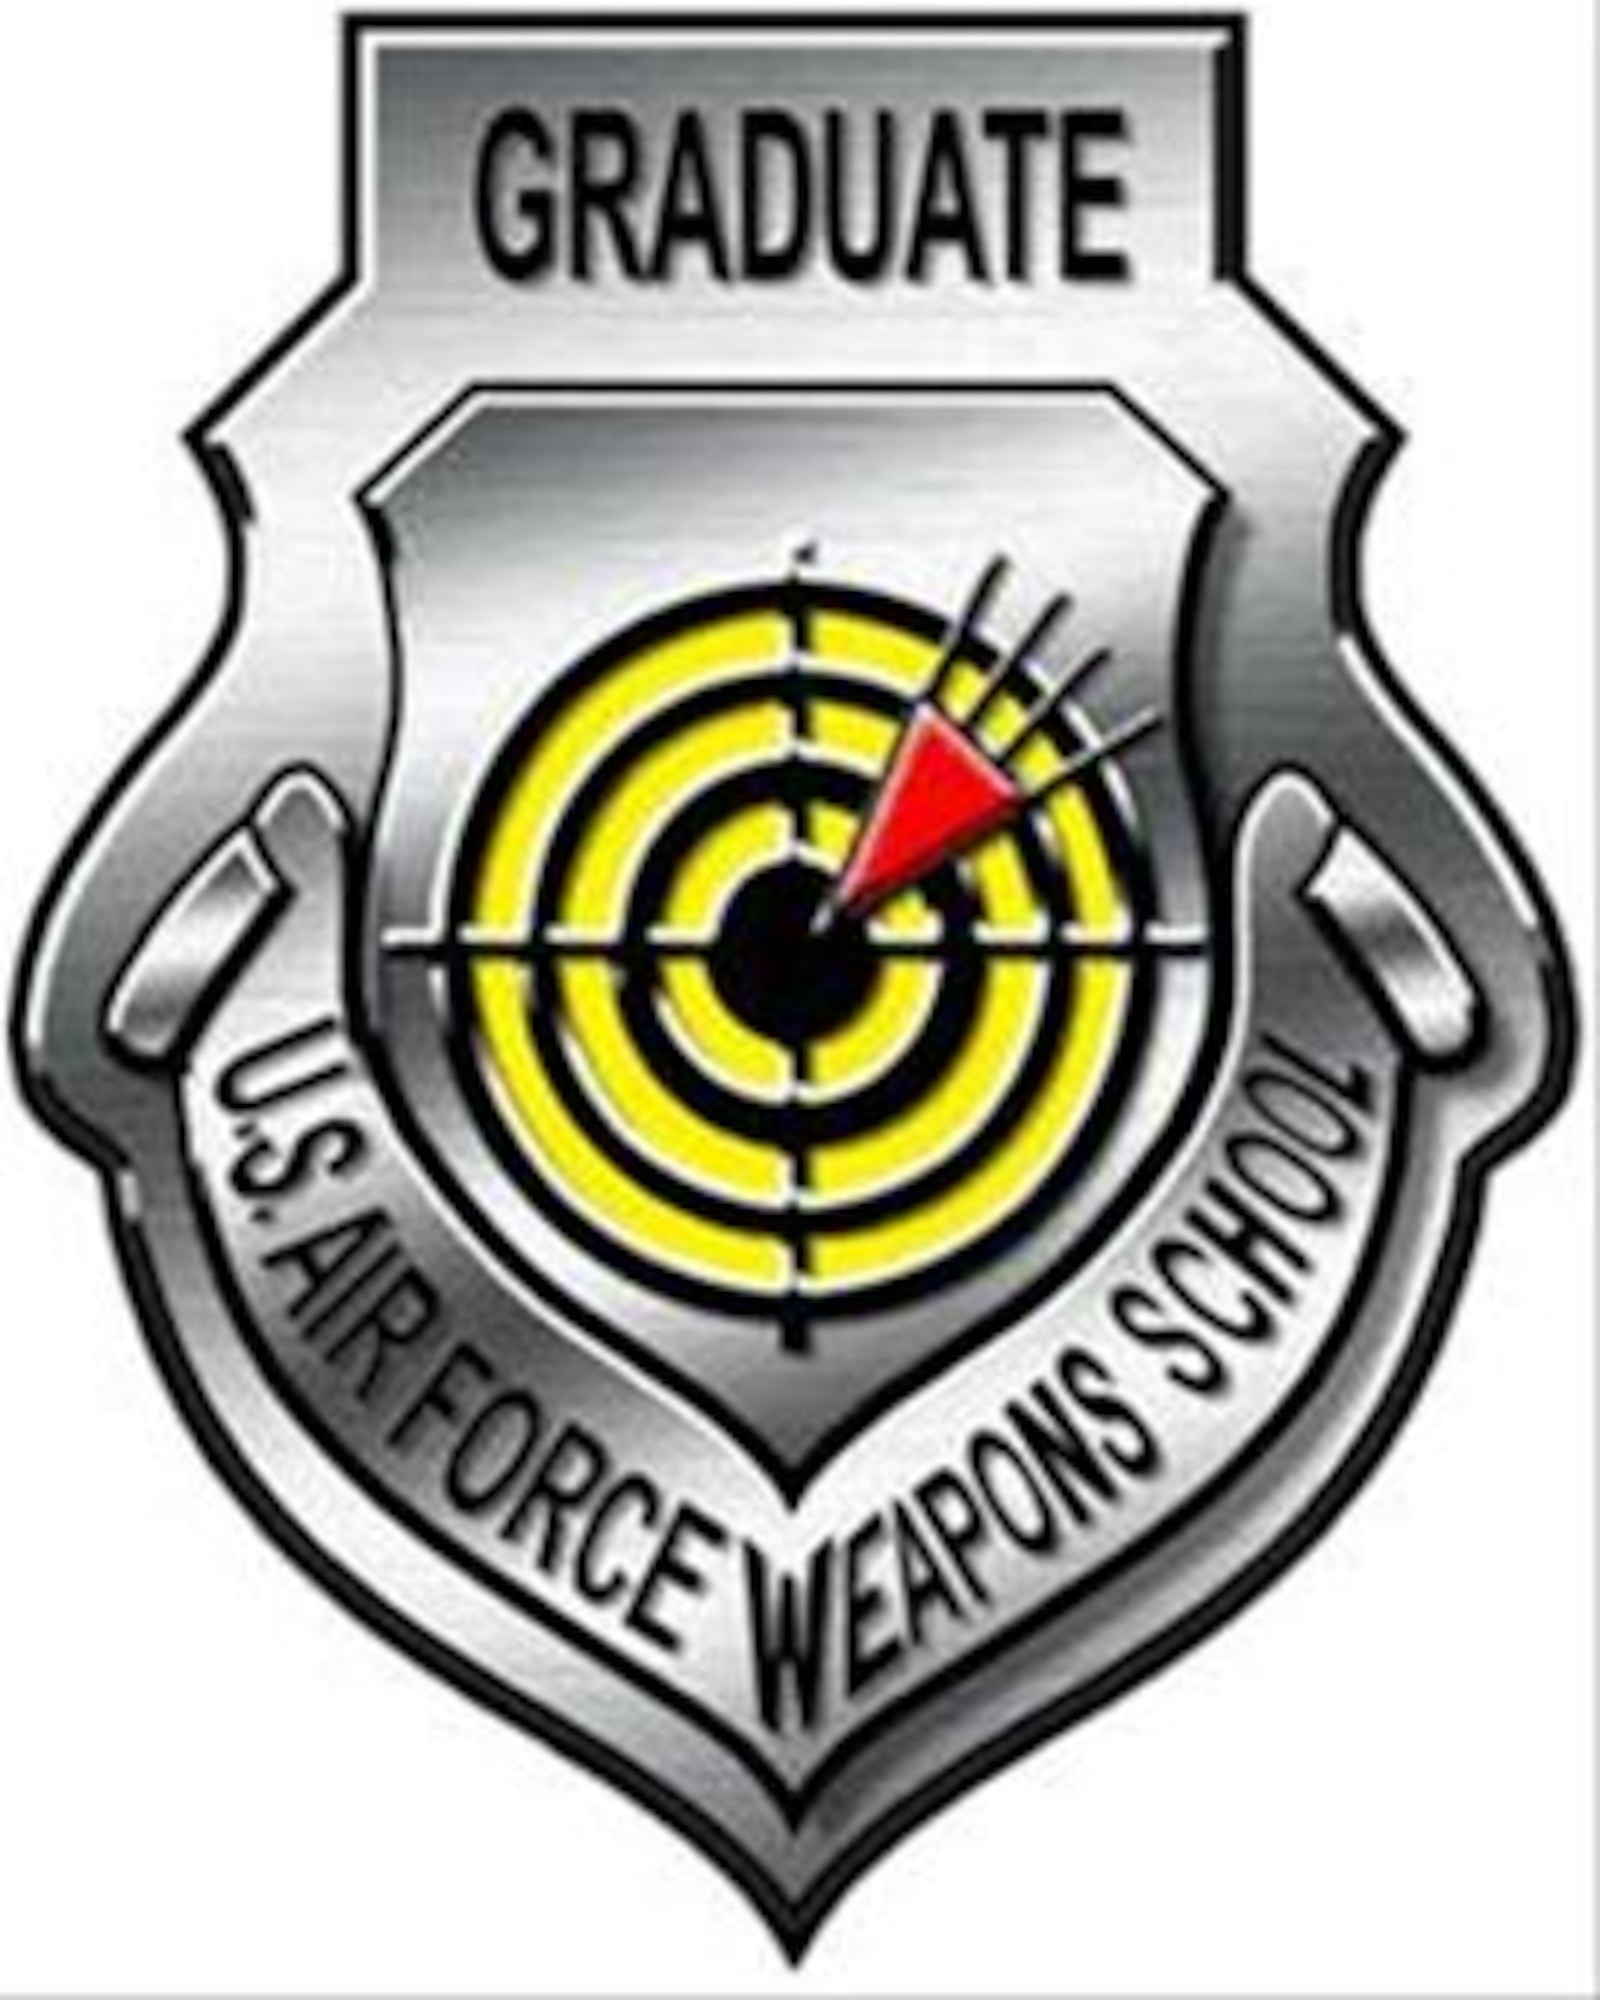 USAF Weapons School graduate patch